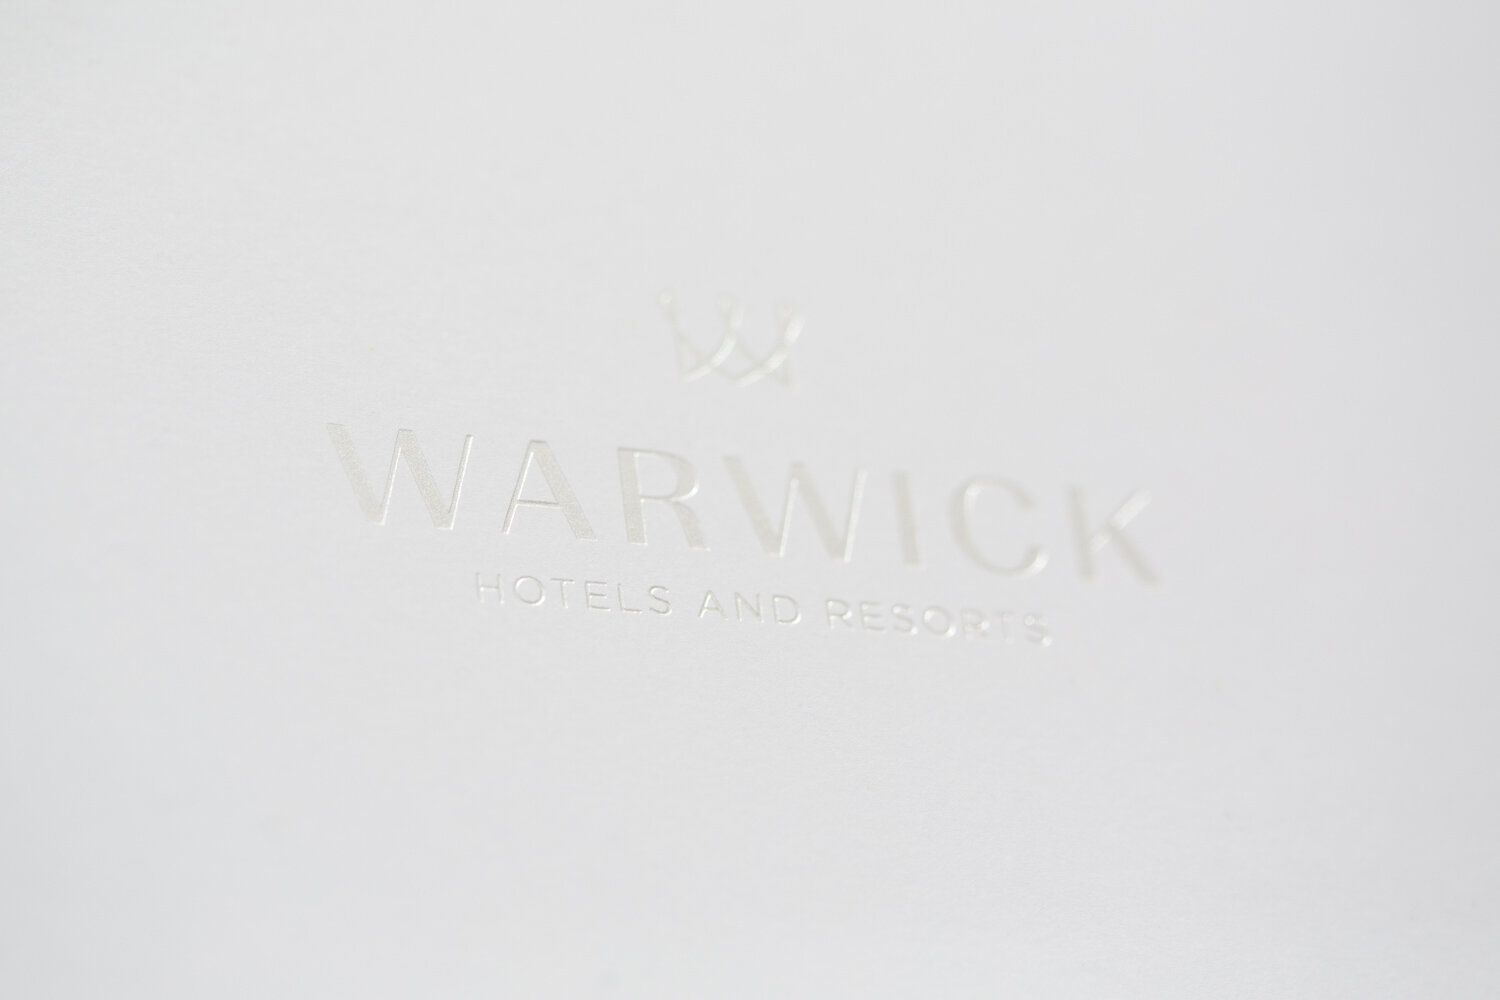 Warwick Hotels and Resorts Branding Elements